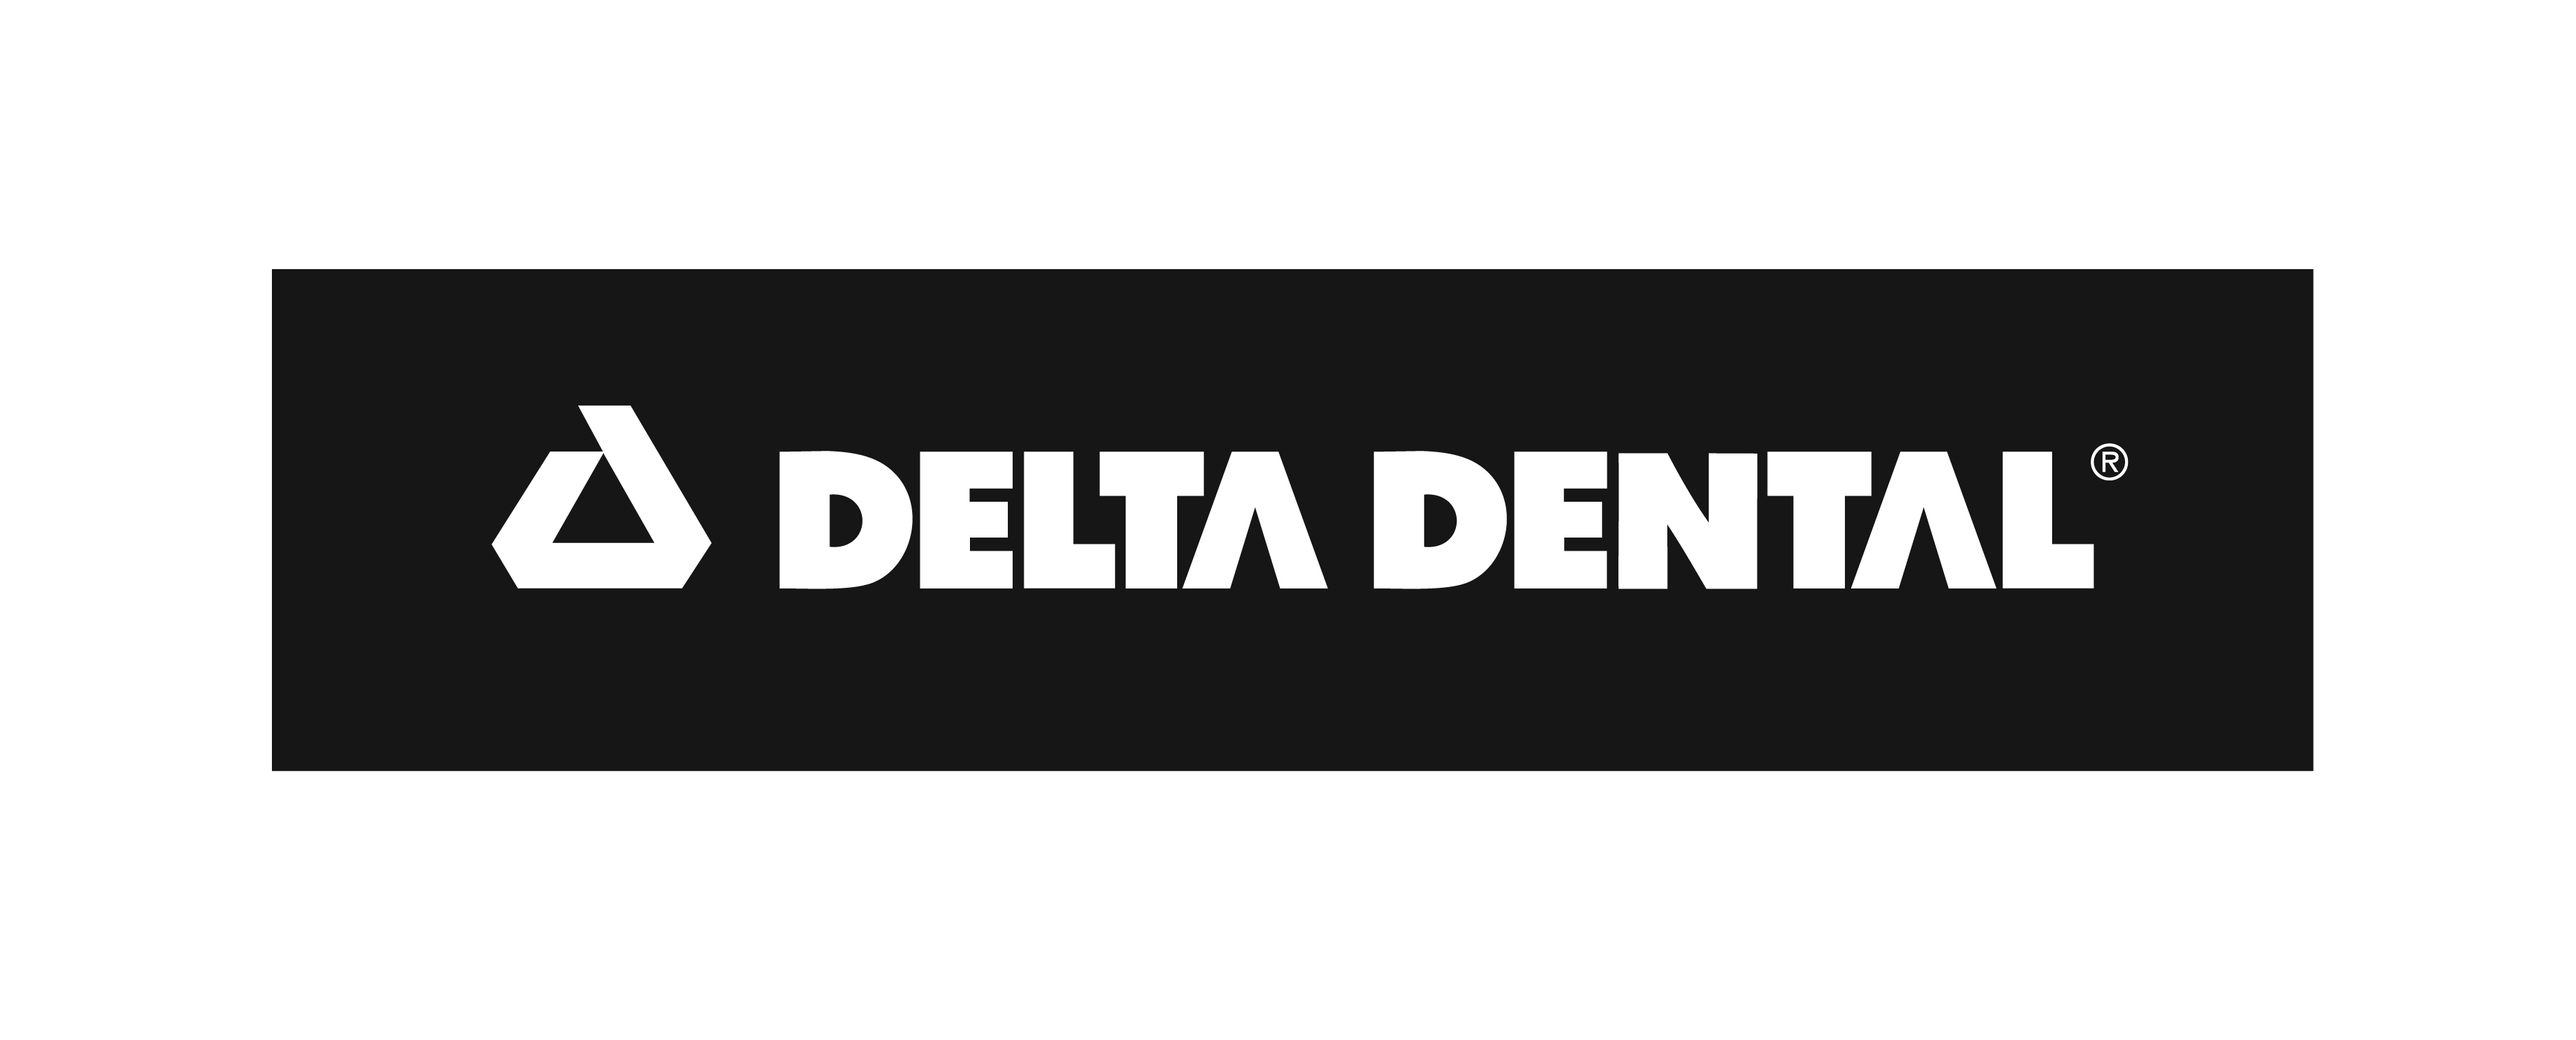 Fraser and Delta Dental of Minnesota Partner on iPhone App